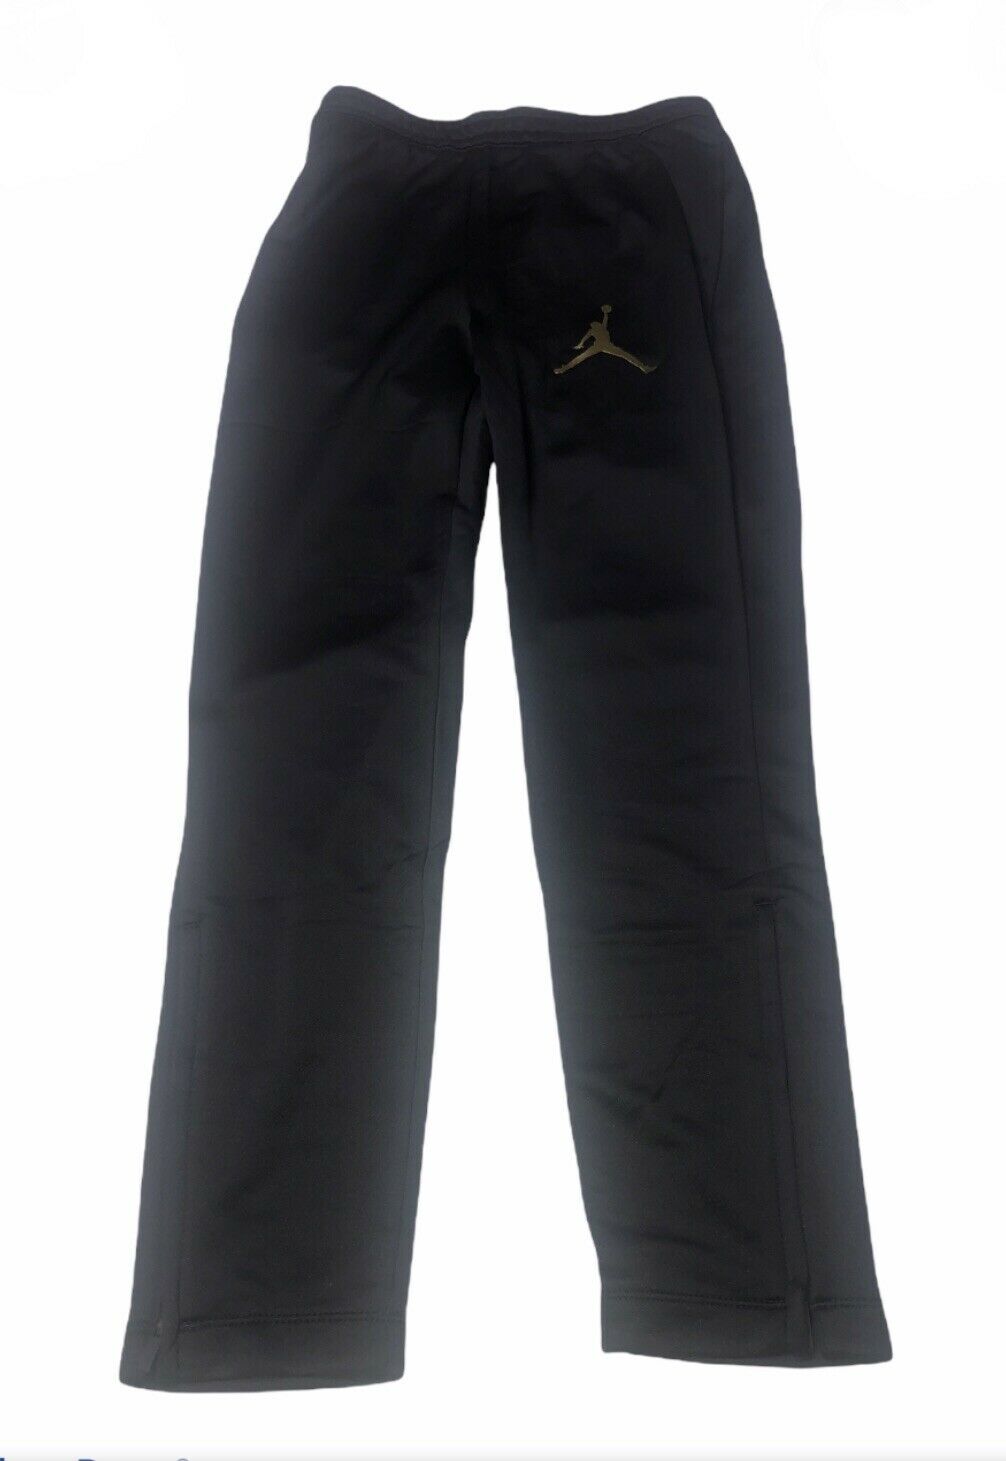 New Air Jordan Nike Big Kids Jogger Pants Black  size  Large Msrp $50 924593